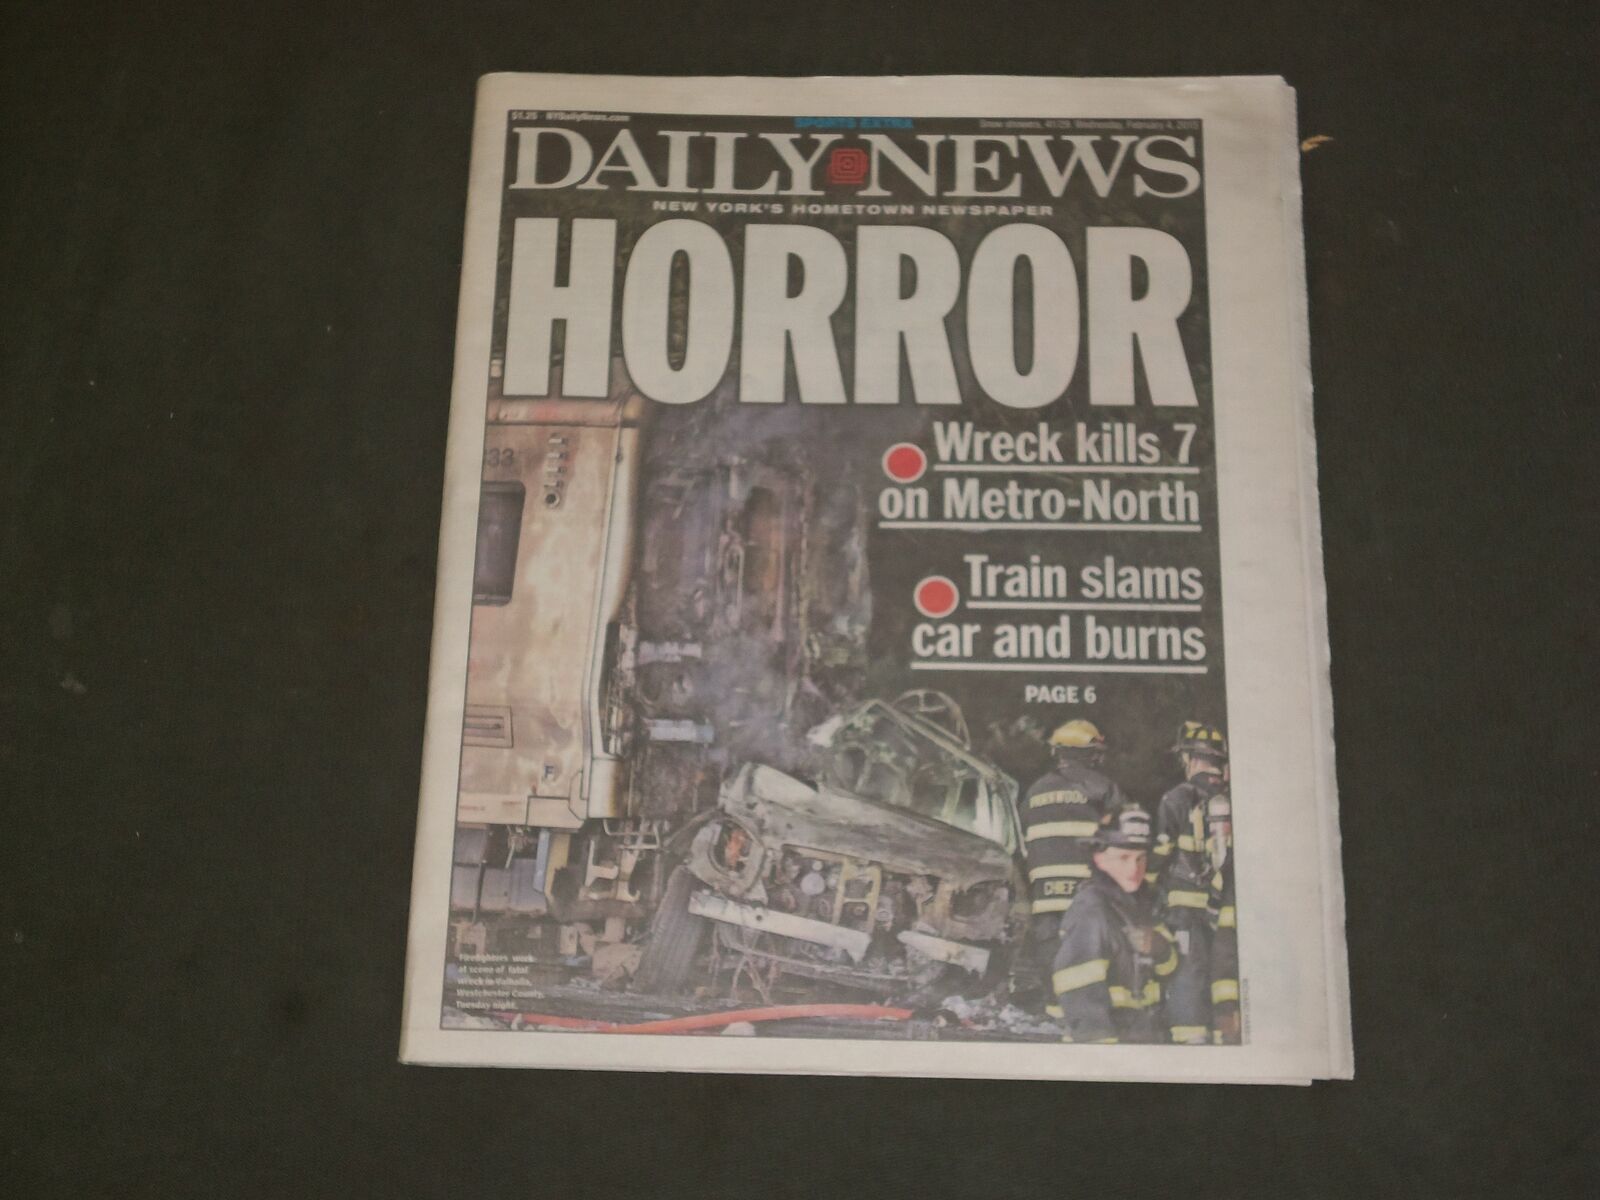 2015 FEBRUARY 4 NEW YORK DAILY NEWS - METRO-NORTH FIERY TRAIN CRASH - 7 KILLED